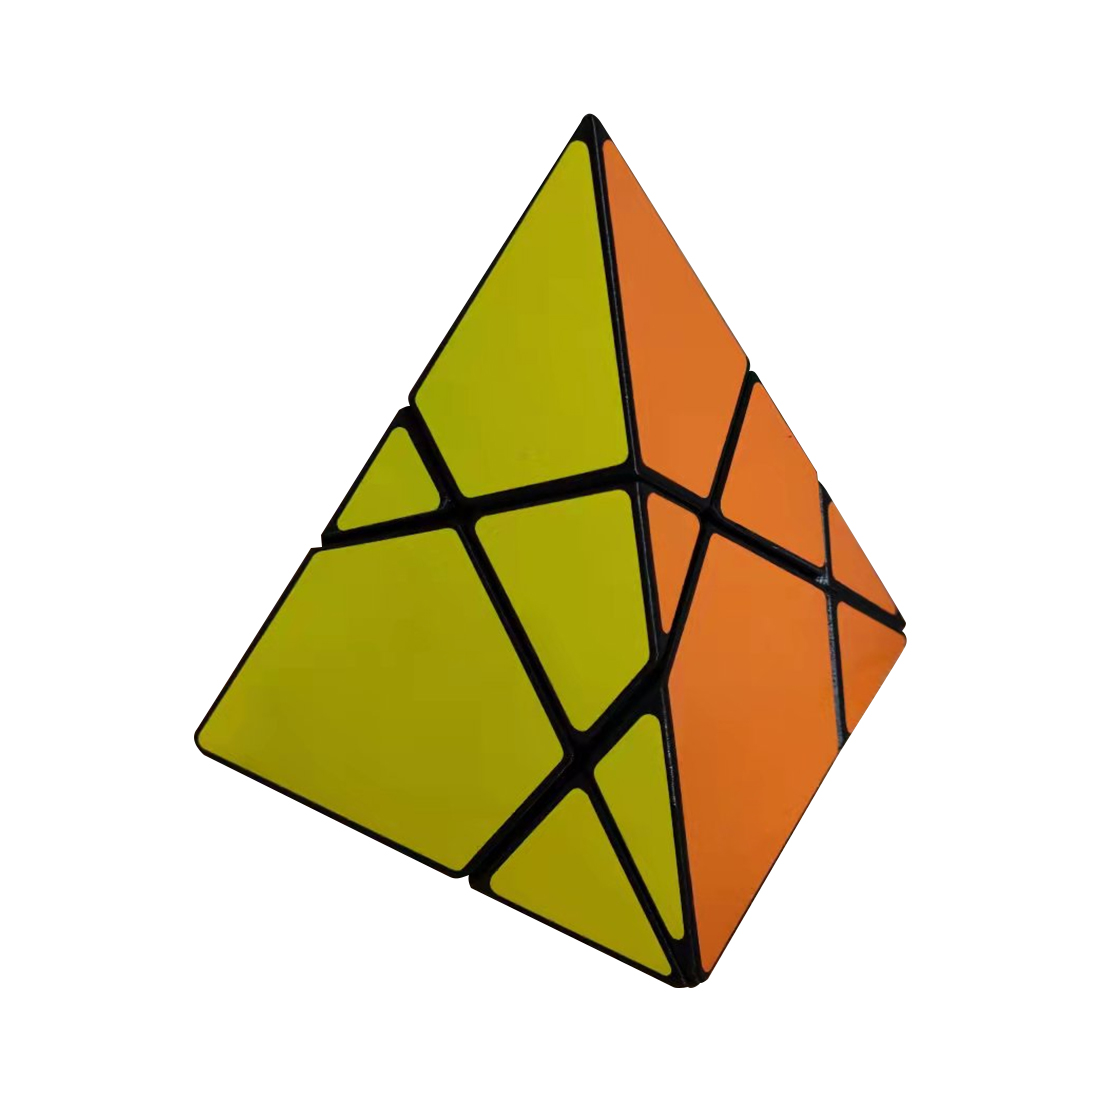 3x3 Pentahedron Pyramid Tower Cube（Windmill Based）